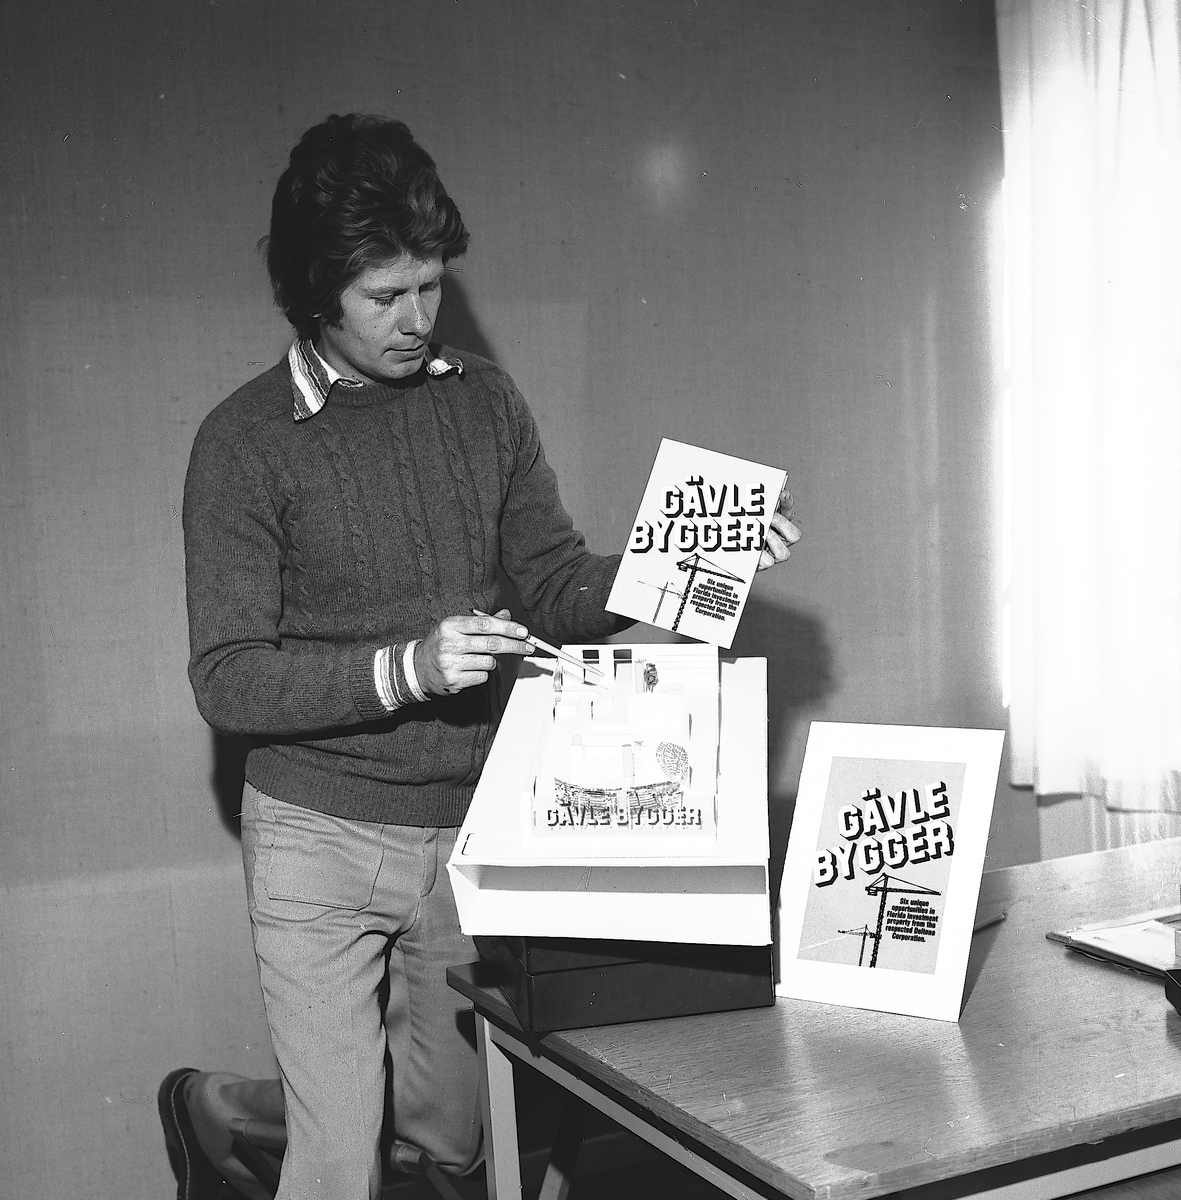 Visar broschyren "Gävle Bygger". Gävle Kommun. Den 6 april 1973

